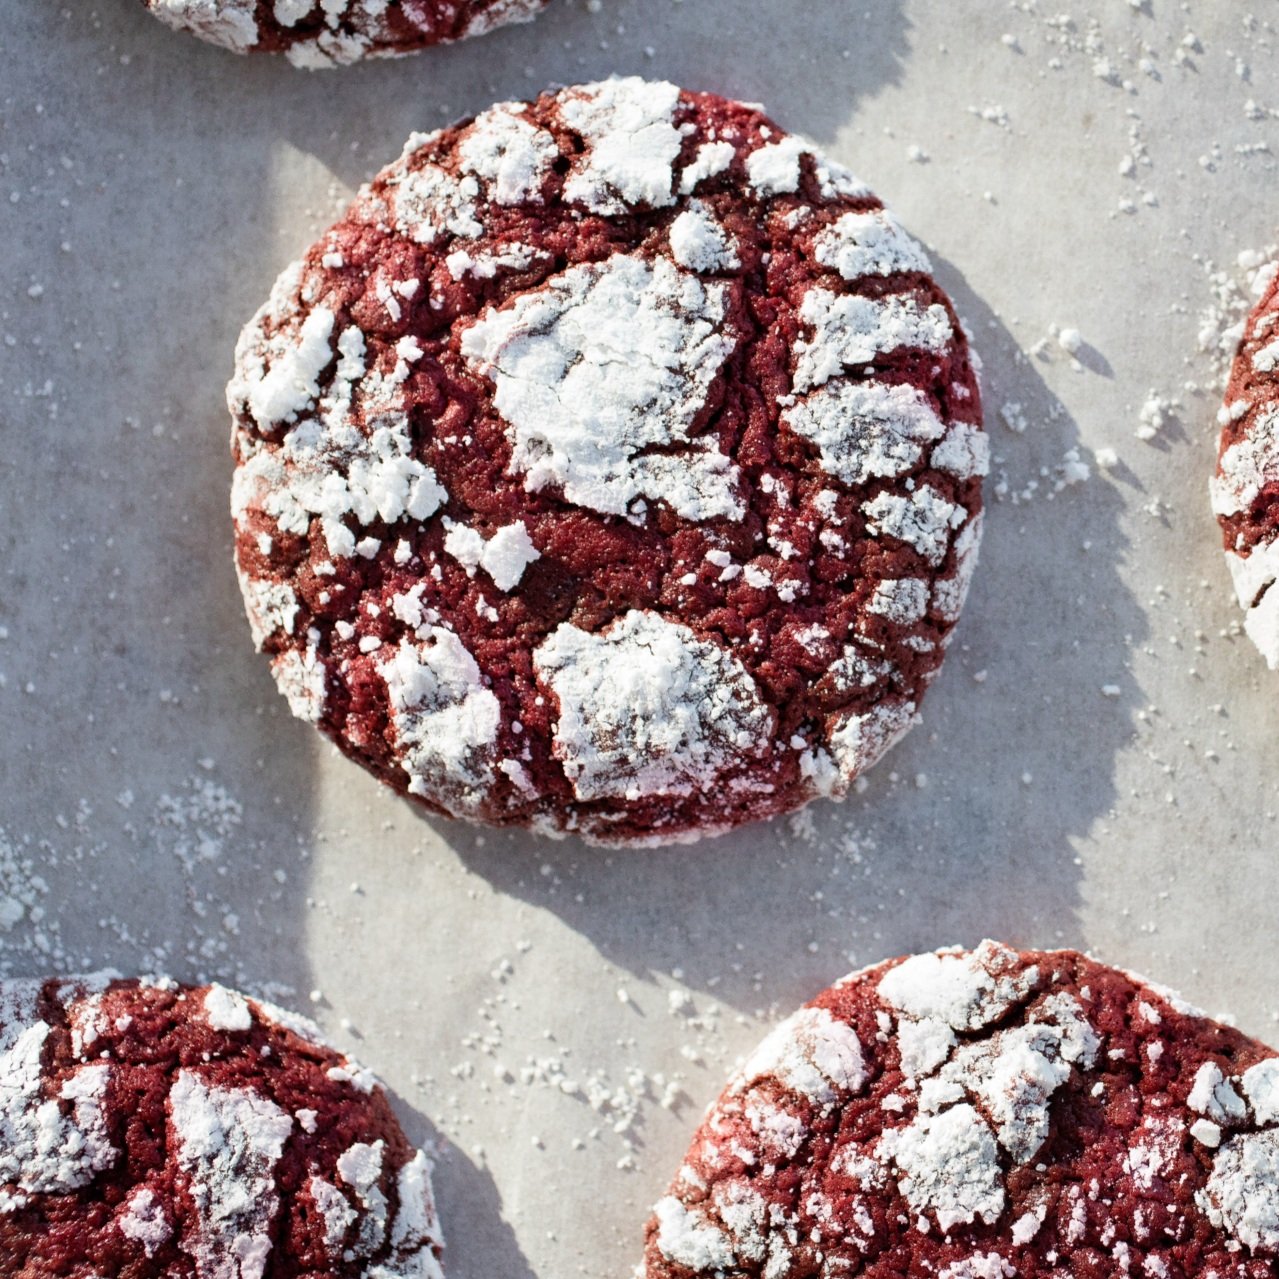 Sarah Kieffer's Red Velvet Crinkle Cookies